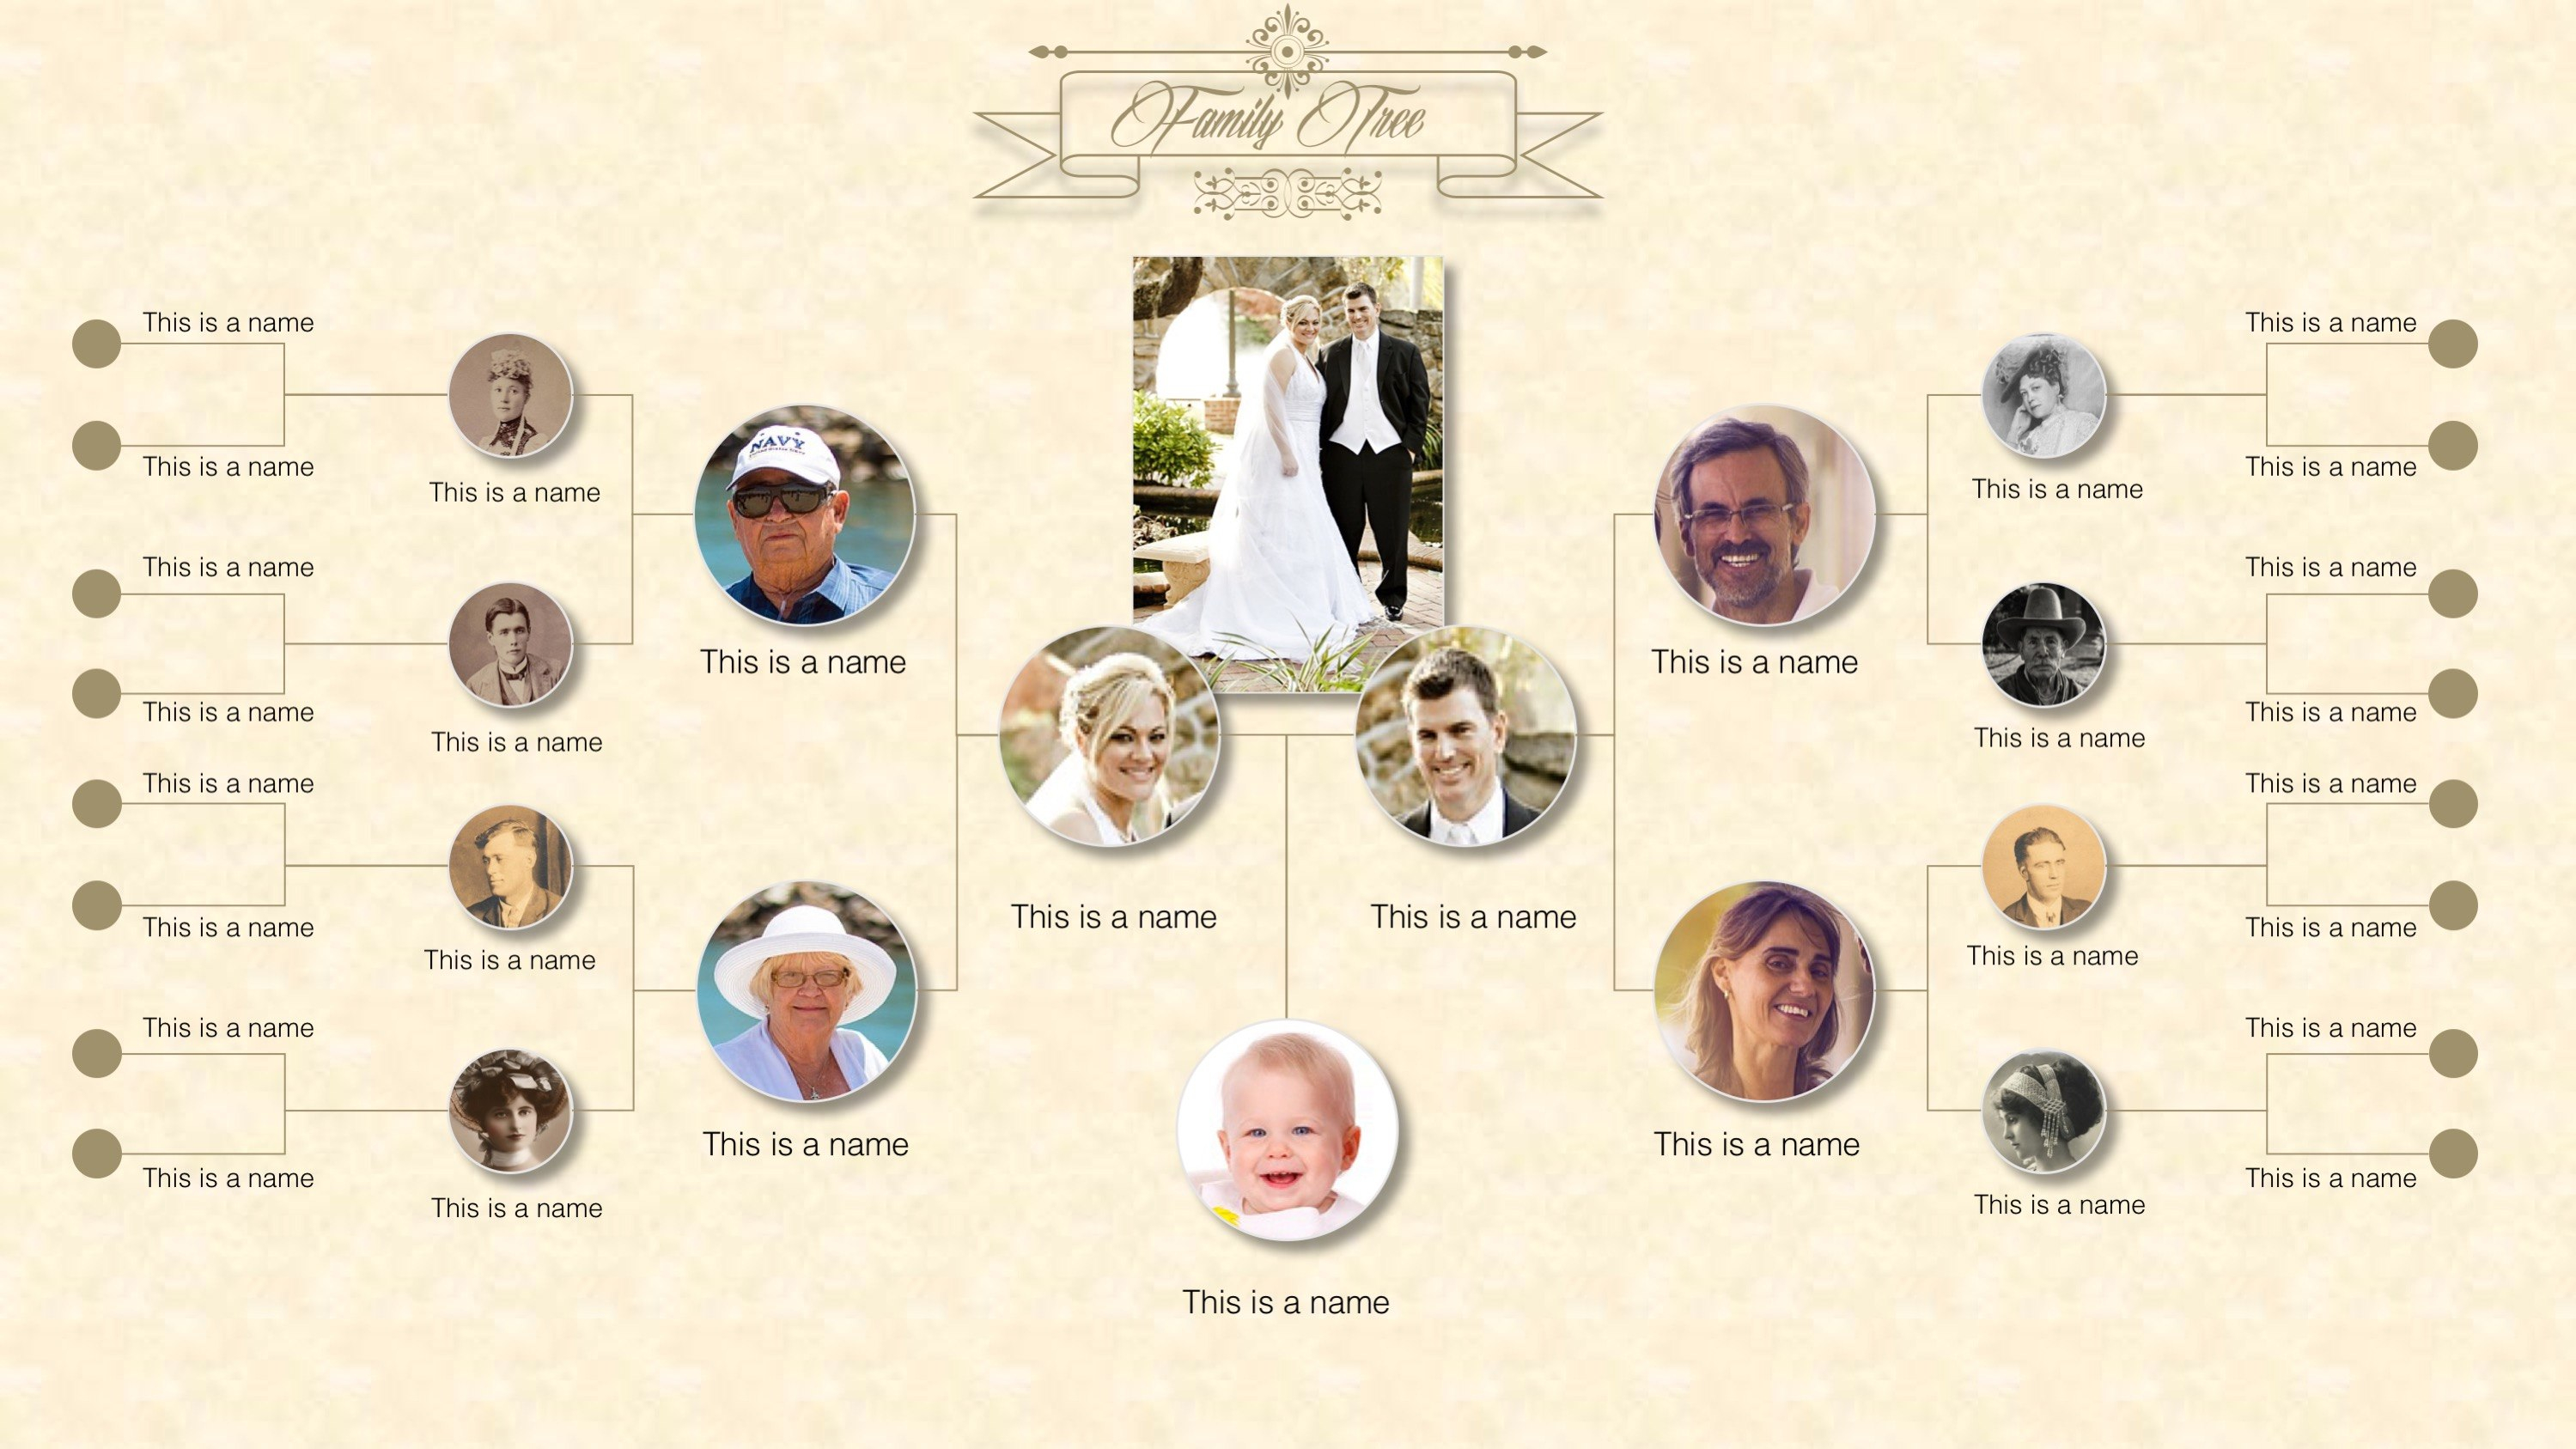 Family Tree Powerpoint Templates  Slidemodel regarding Powerpoint Genealogy Template